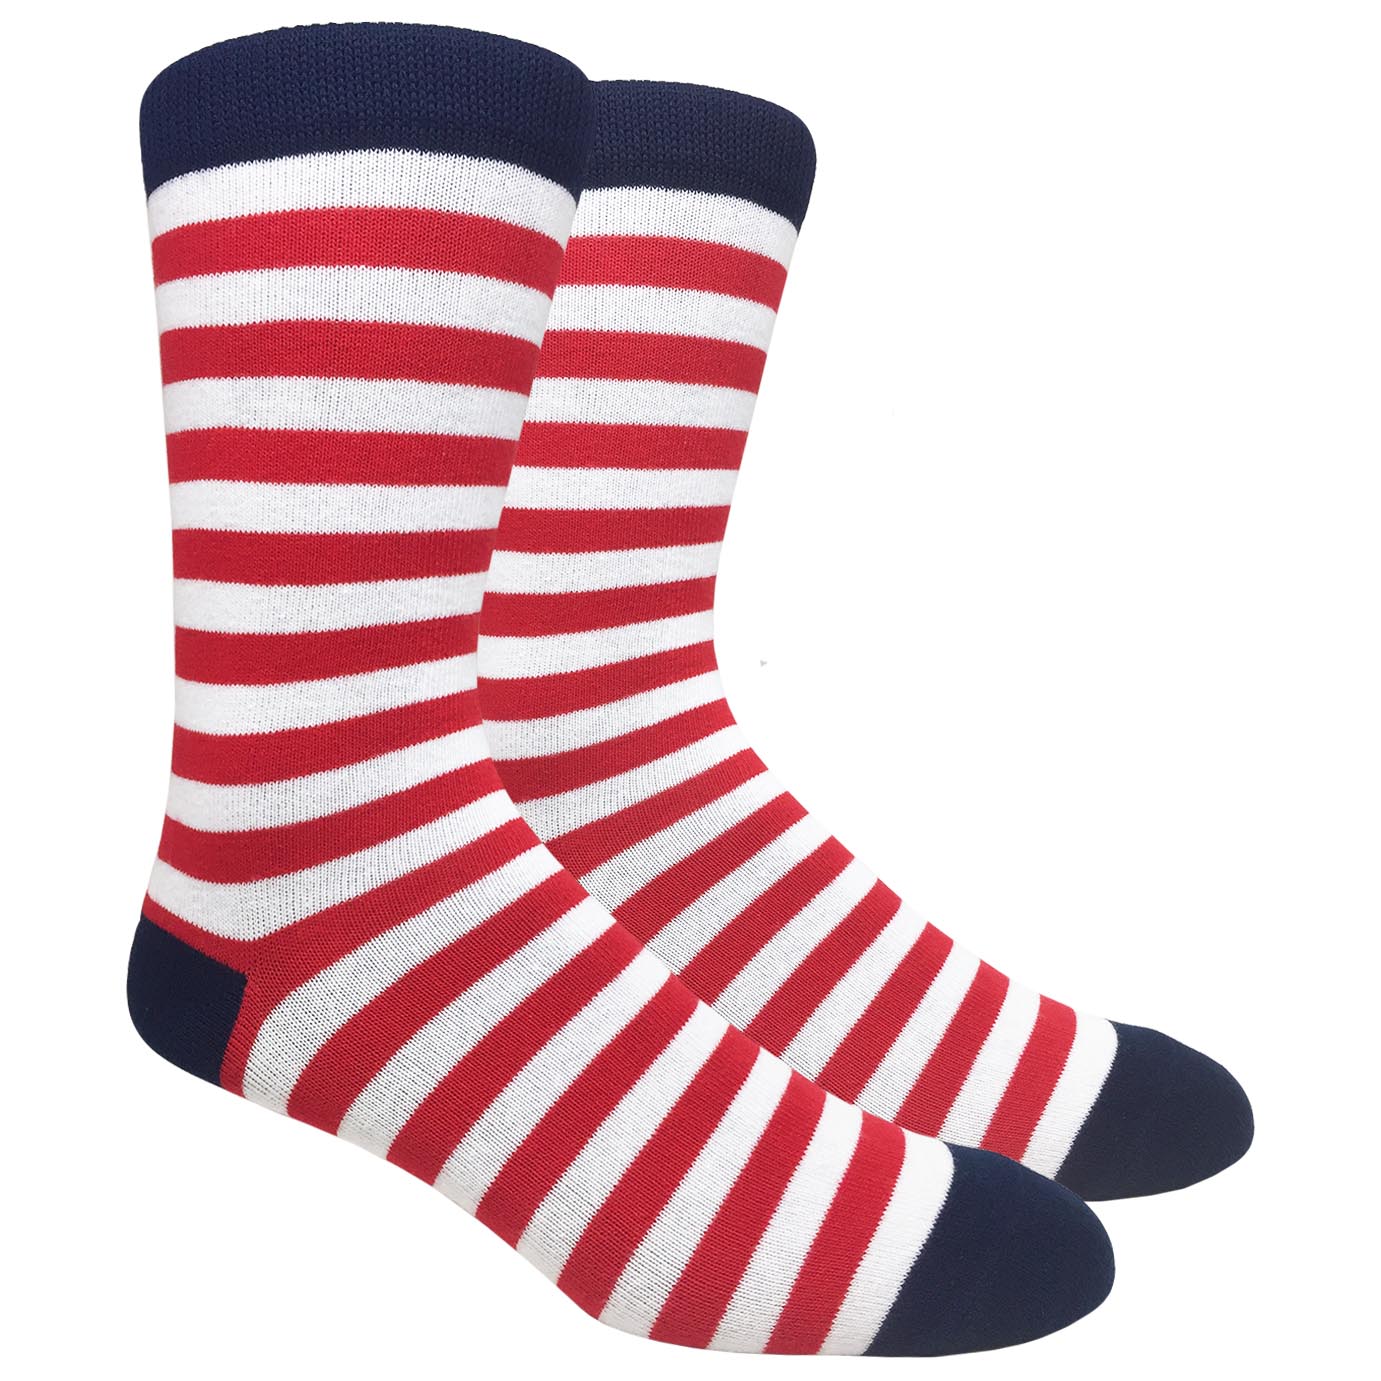 FineFit Black Label Stripe Socks - Red & White